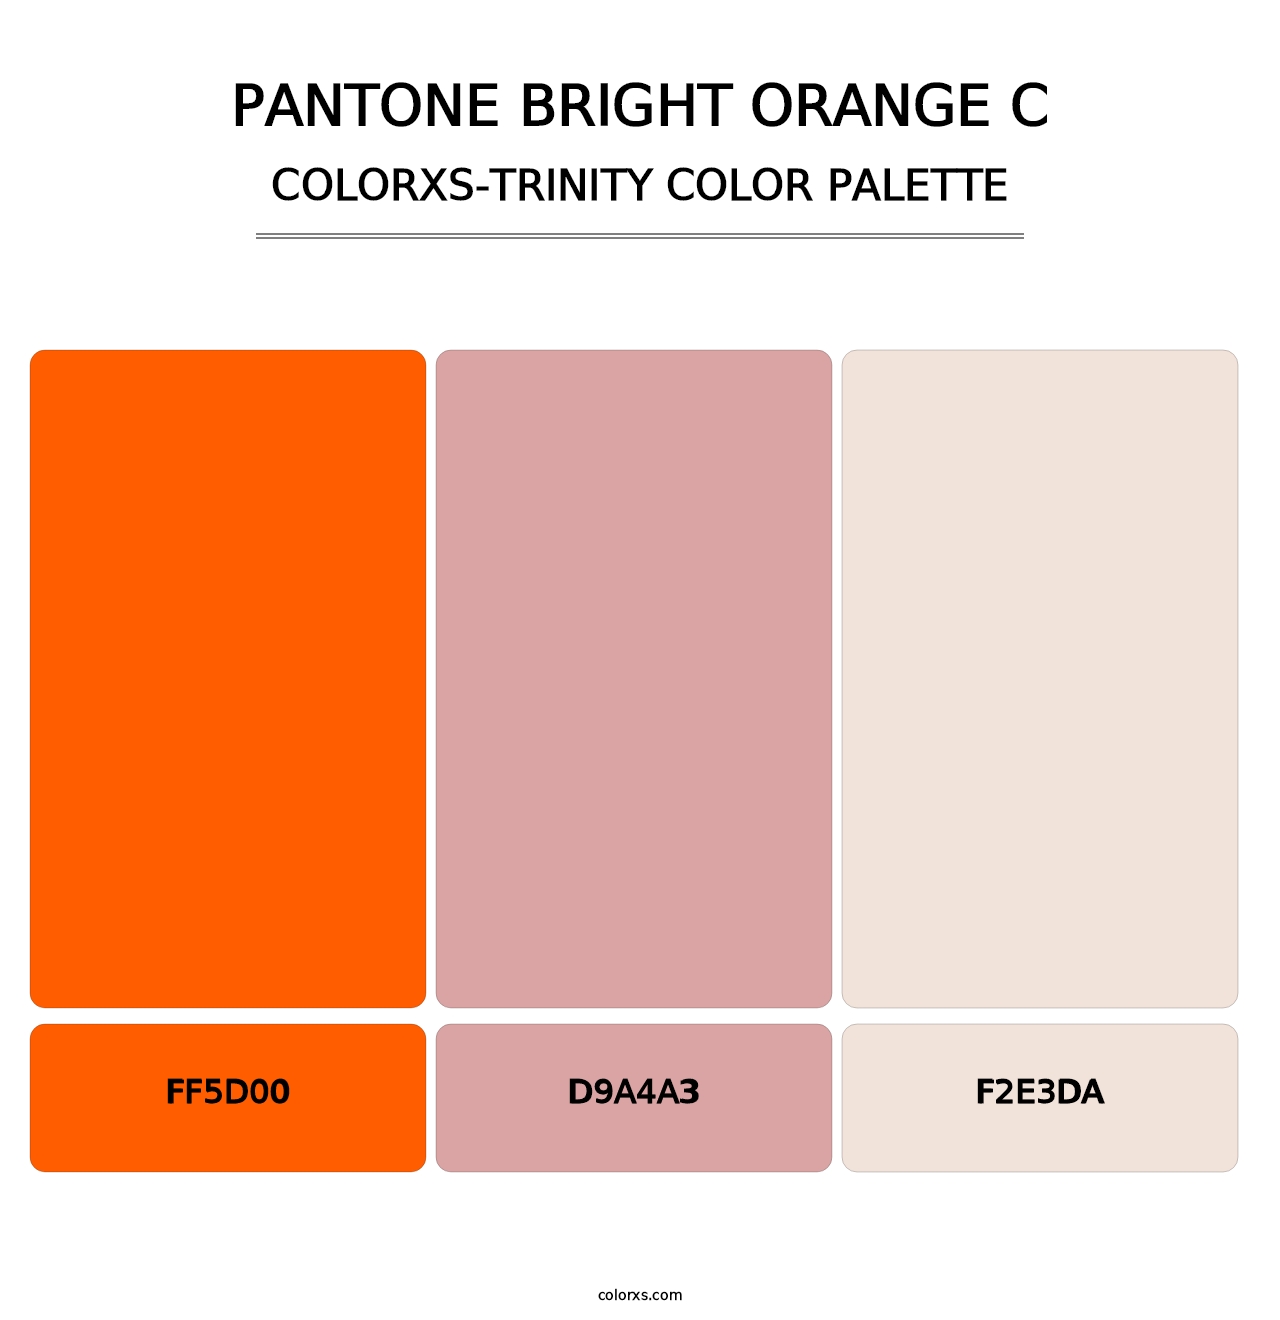 PANTONE Bright Orange C - Colorxs Trinity Palette